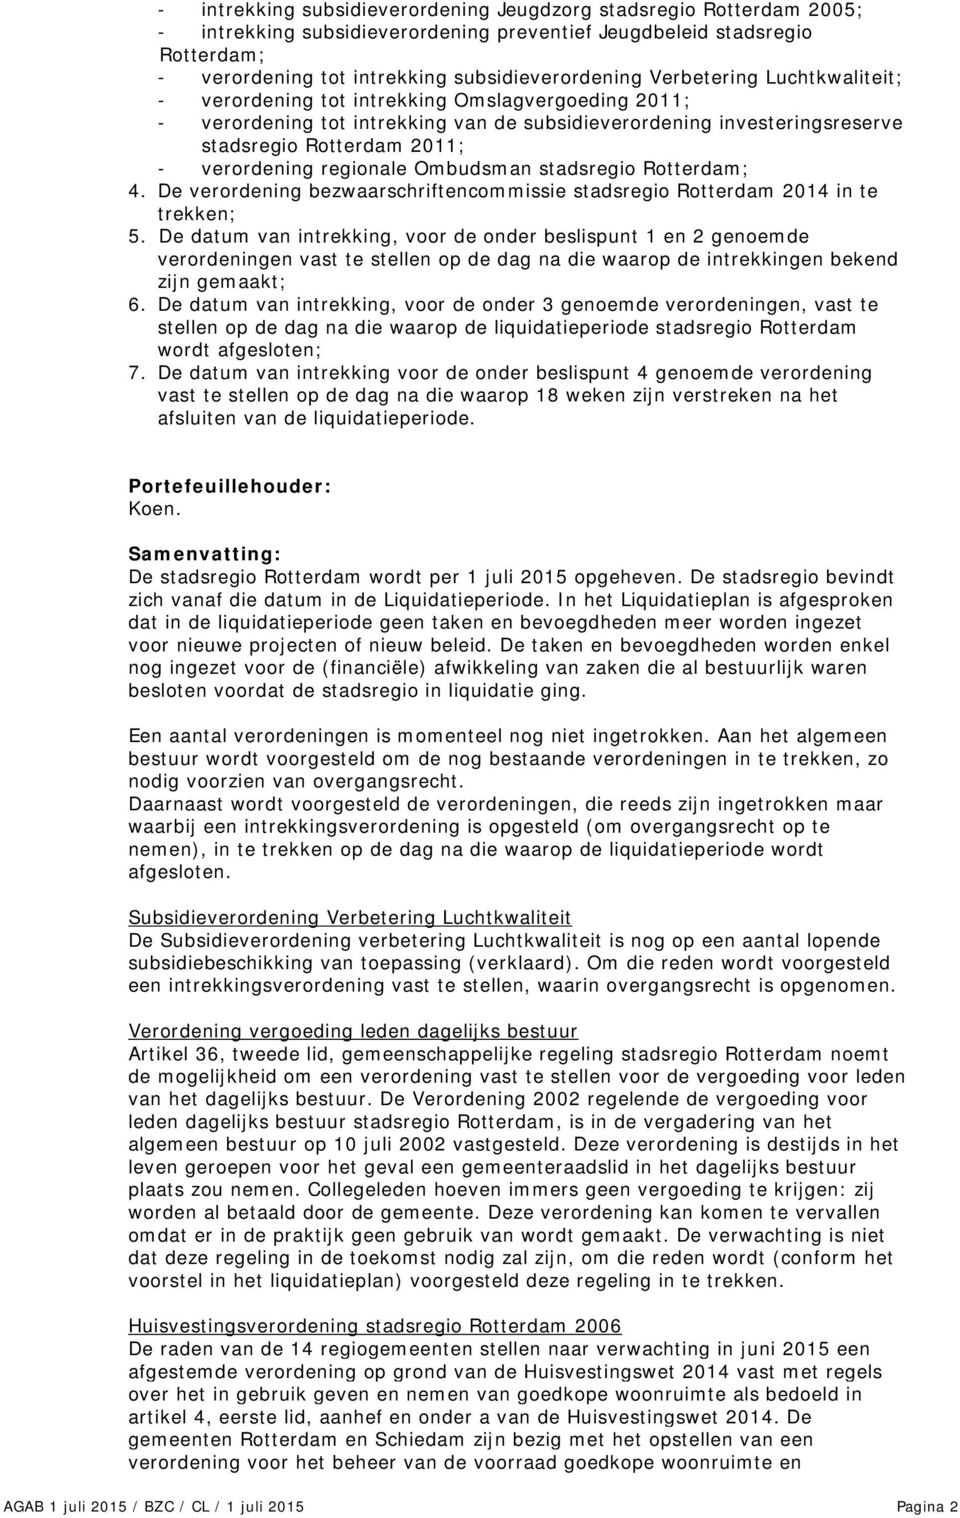 regionale Ombudsman stadsregio Rotterdam; 4. De verordening bezwaarschriftencommissie stadsregio Rotterdam 2014 in te trekken; 5.